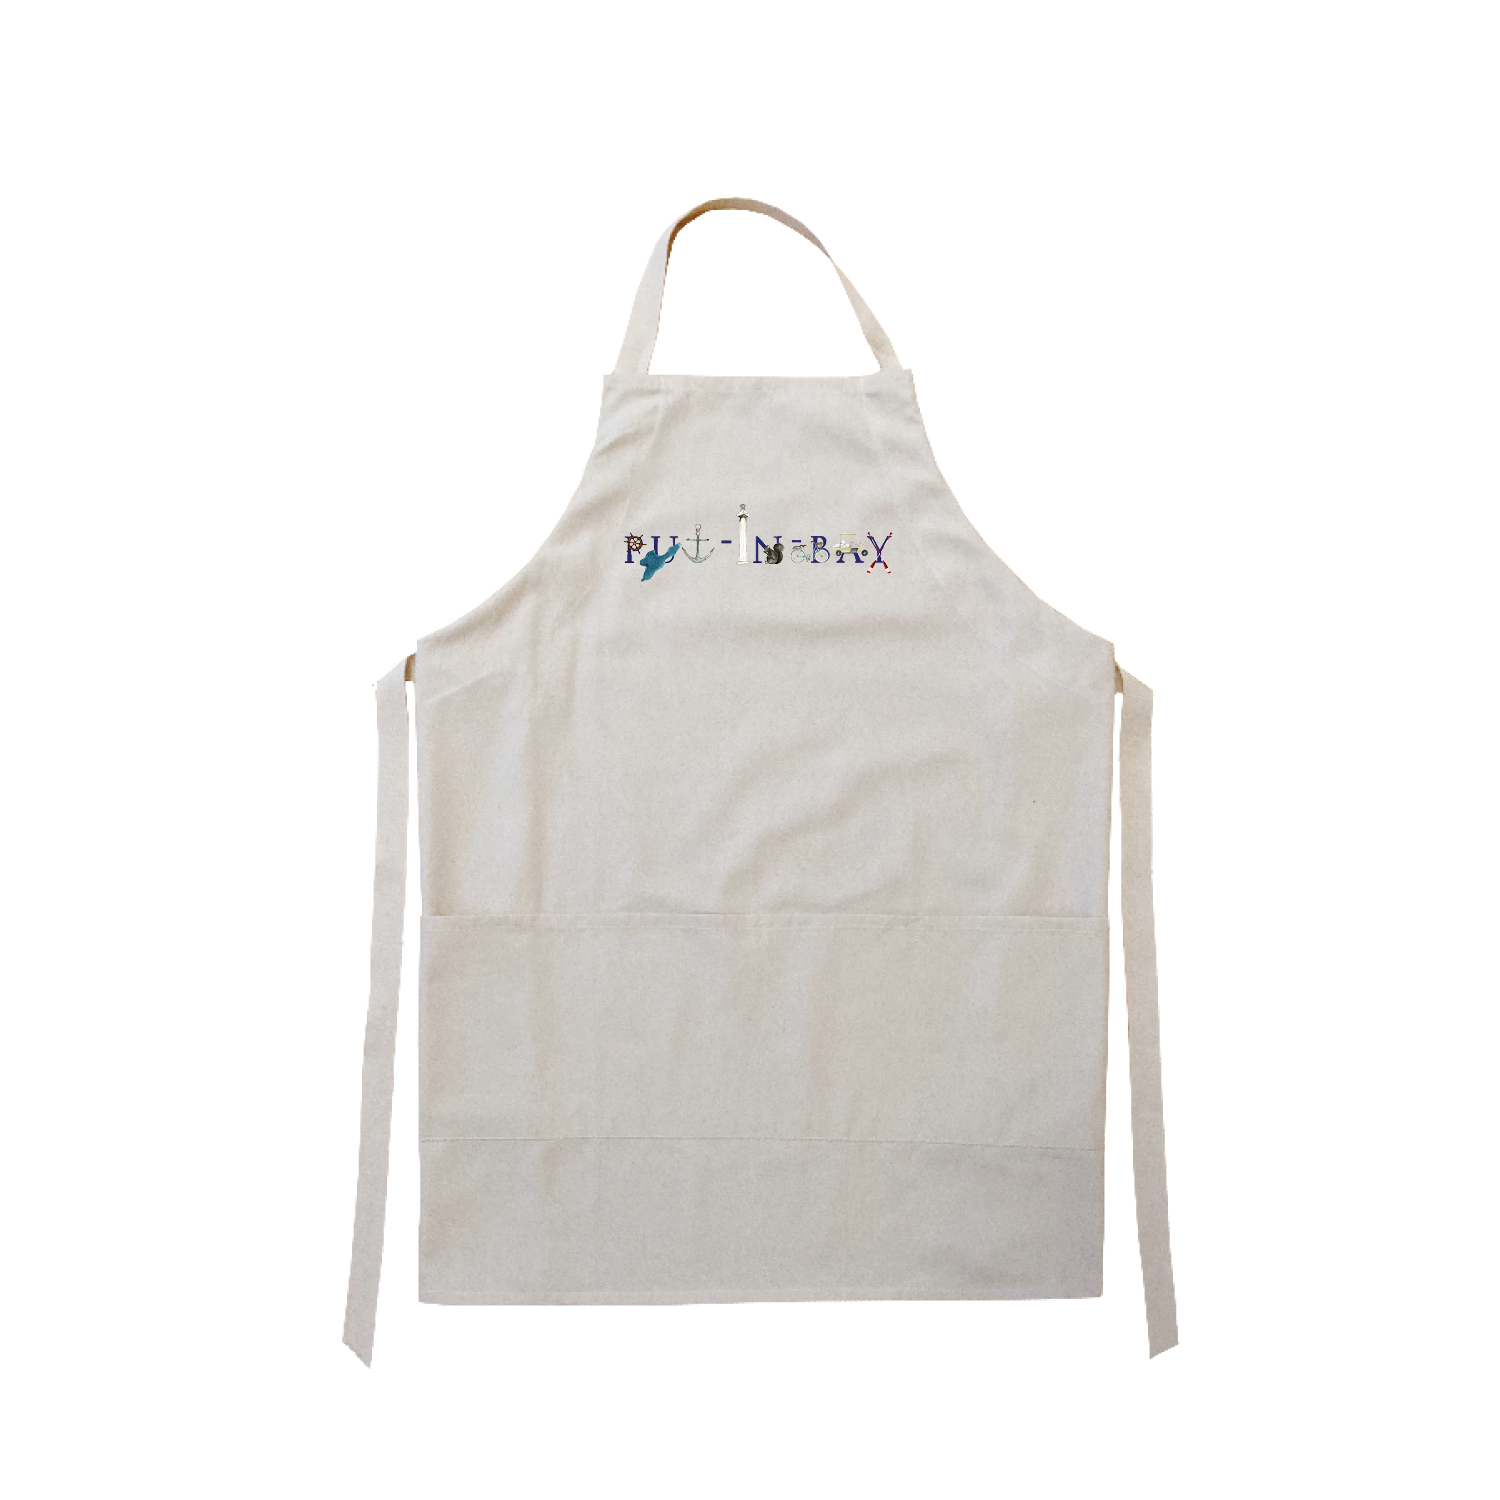 put-in-bay apron